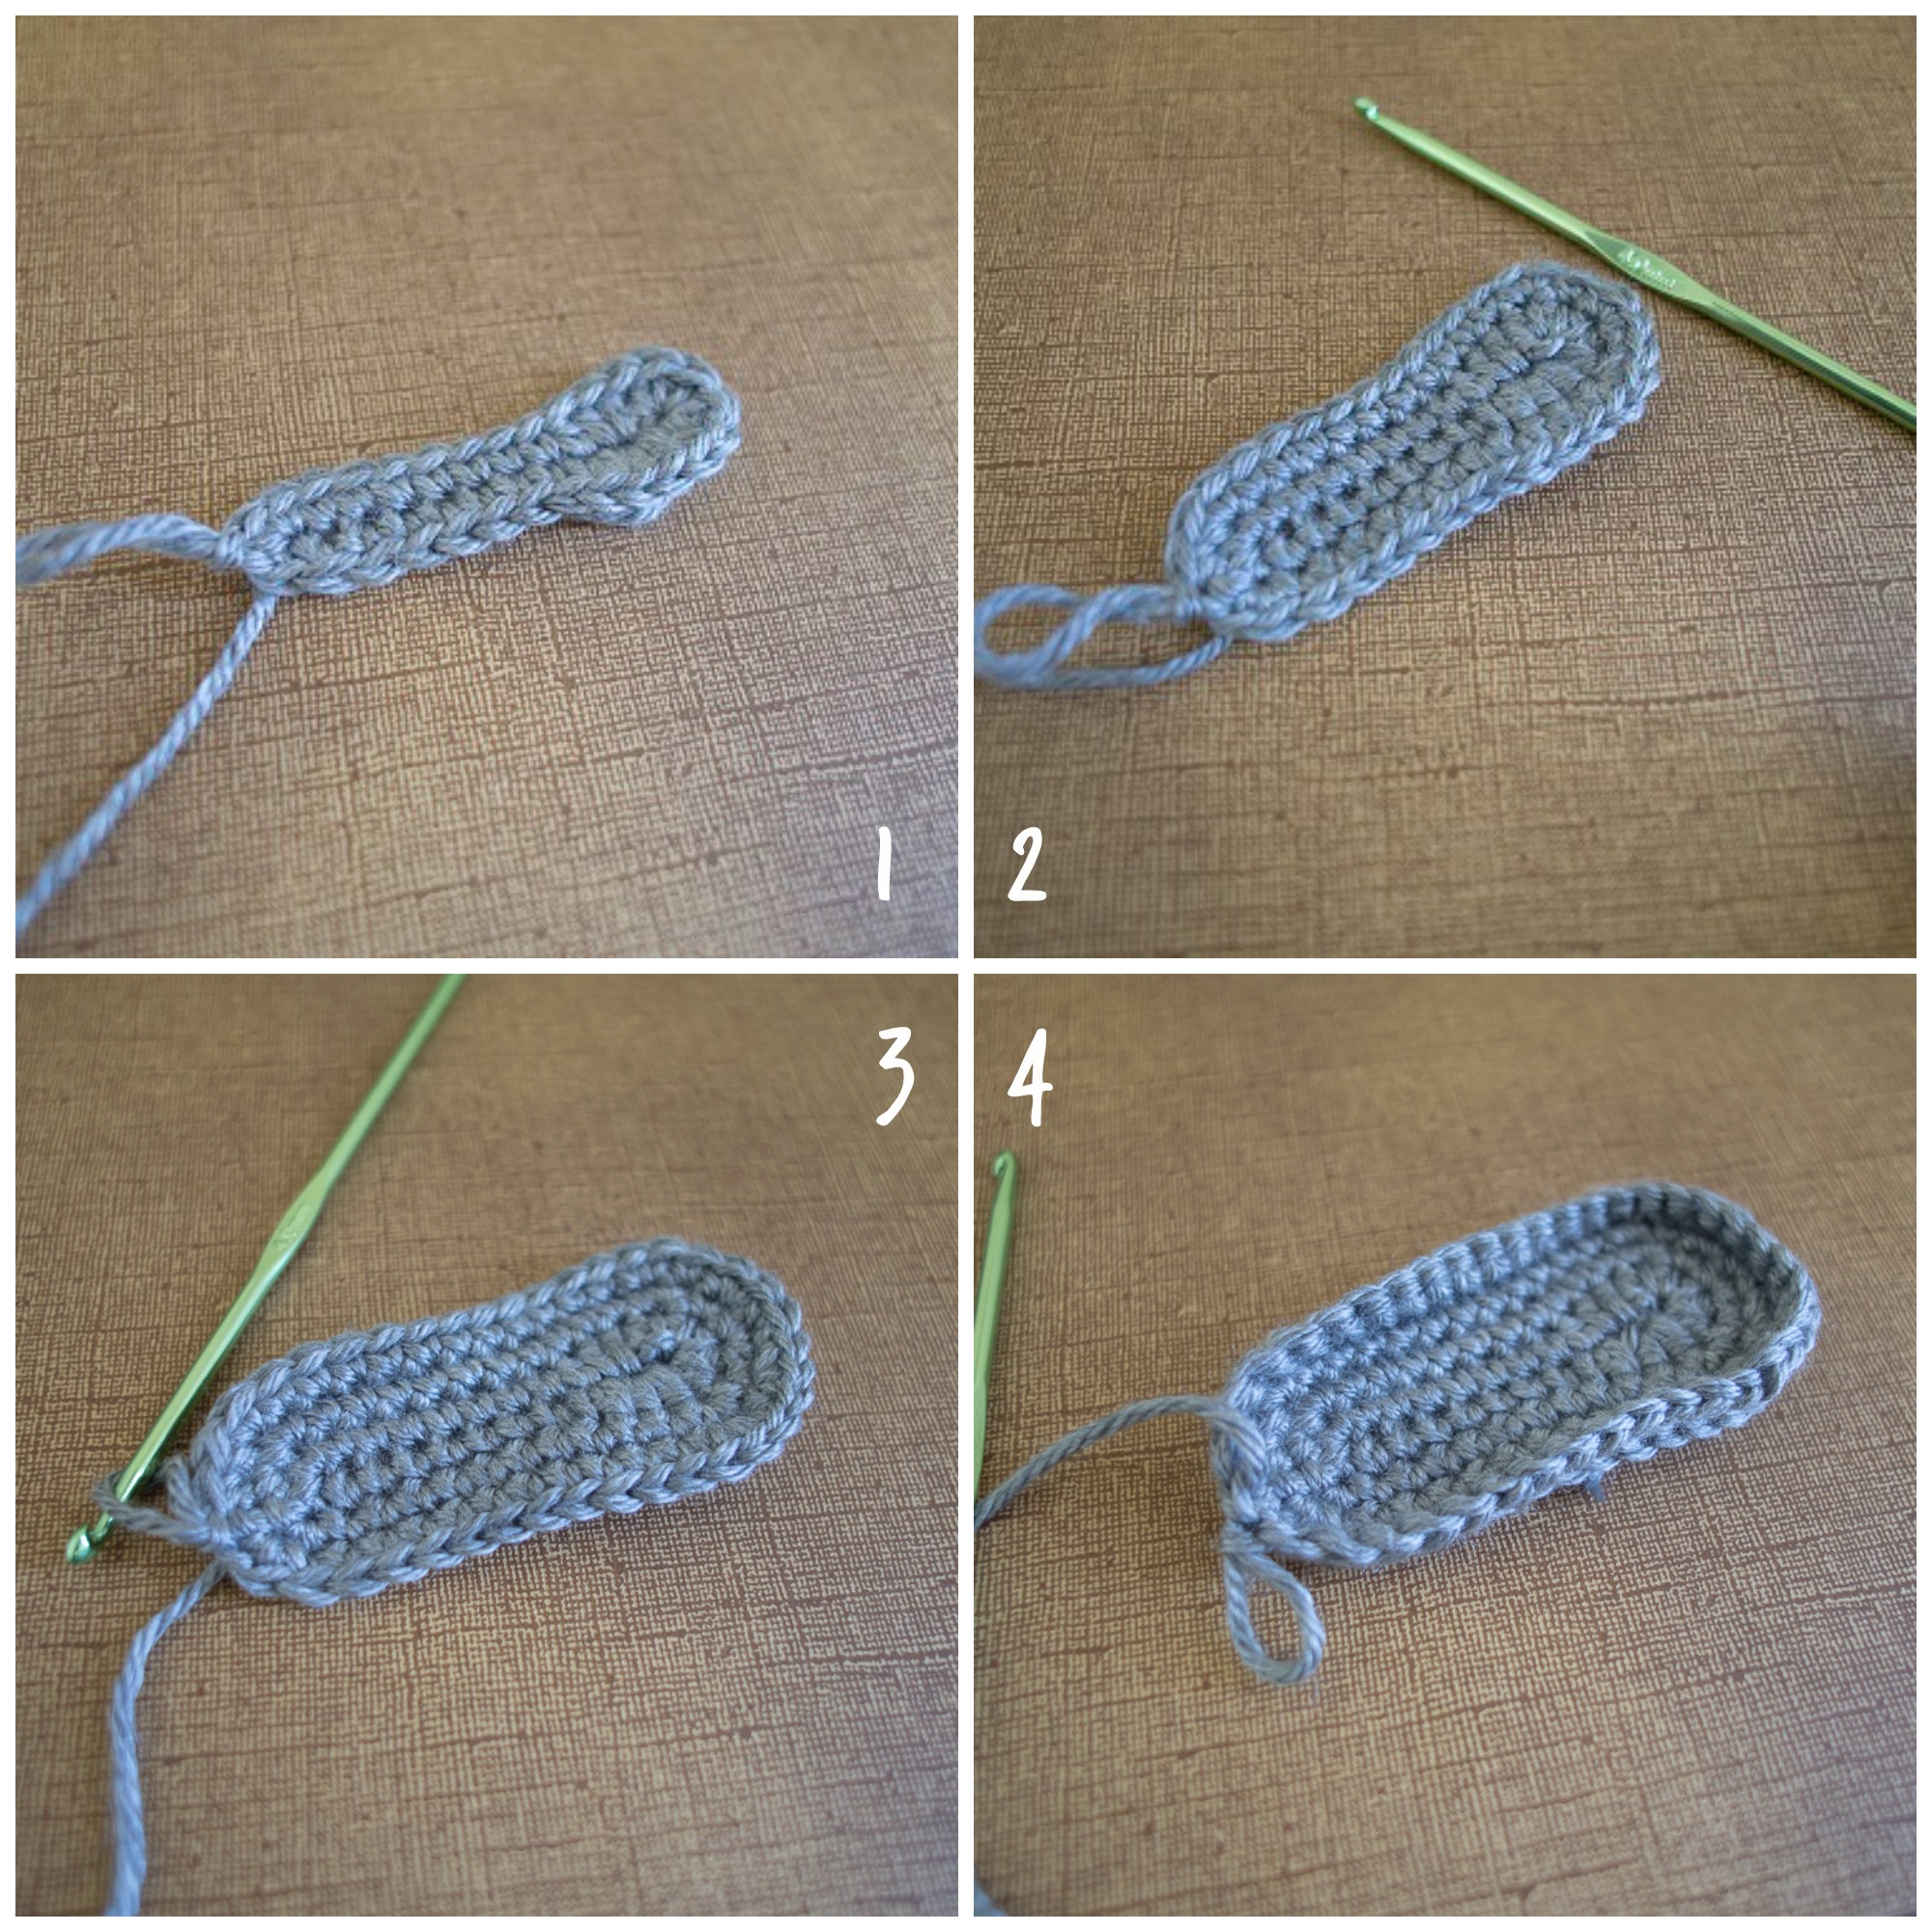 Vintage Crochet PATTERN to make Baby Booties Loopy Boots Looped VioletBooties 